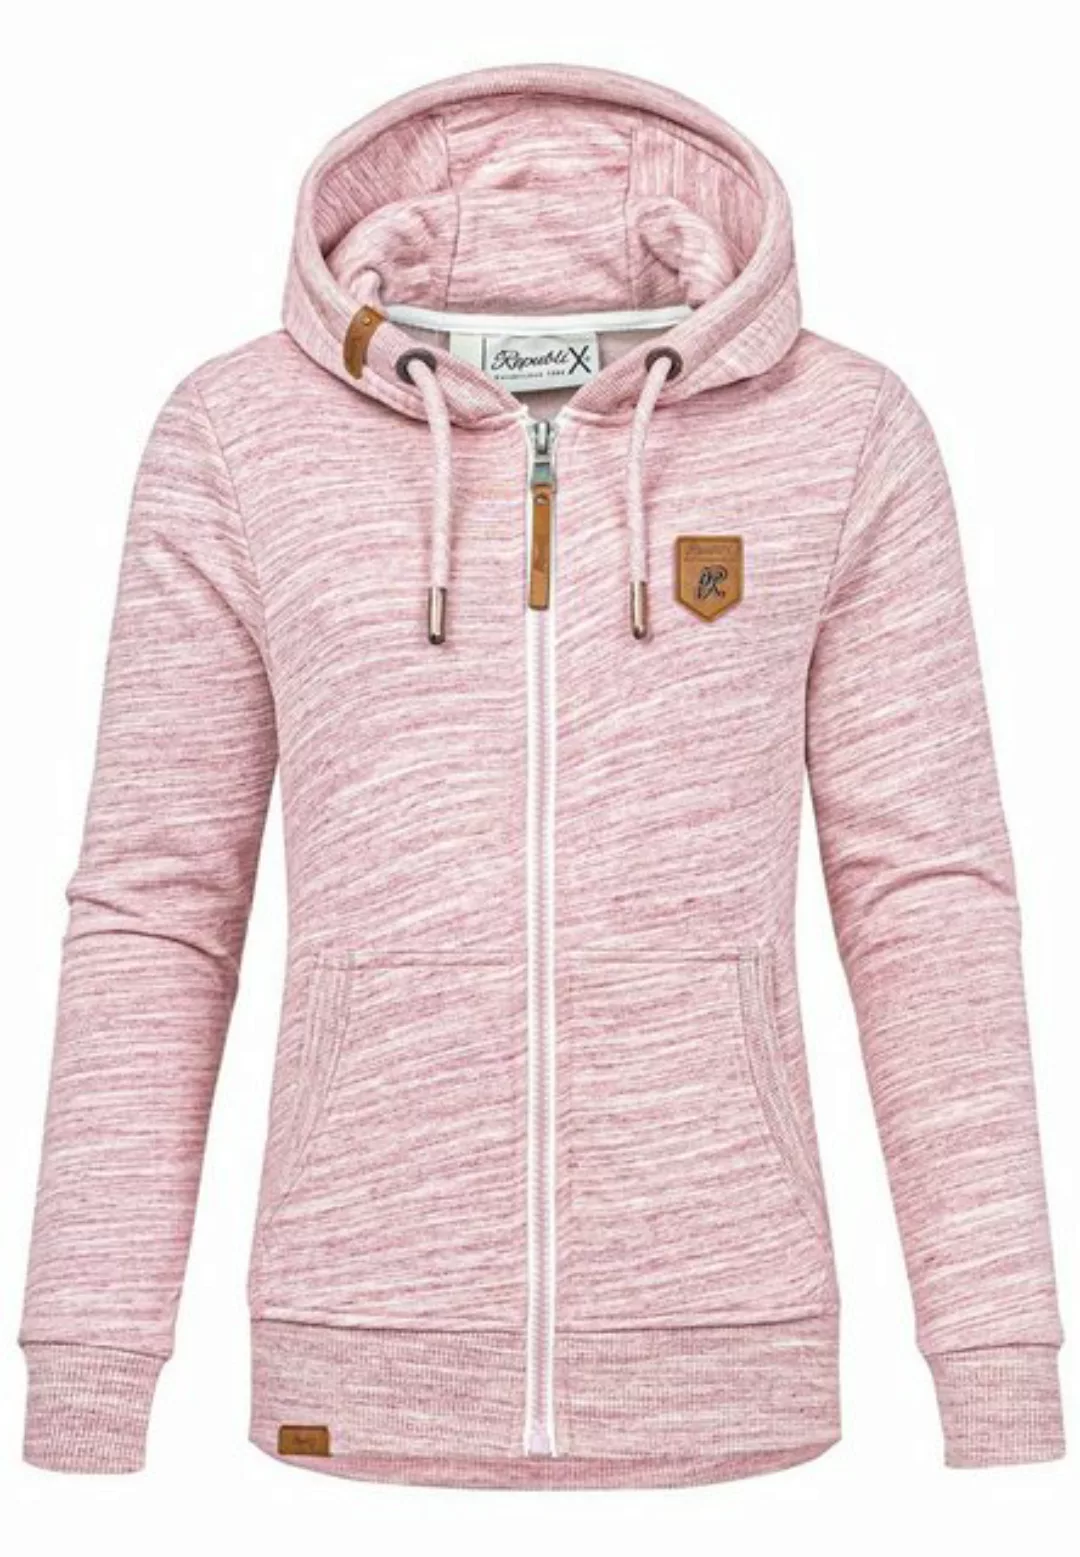 REPUBLIX Sweatjacke FREYA Damen Hoodie Sweatshirt Pullover Zipper Jacke günstig online kaufen